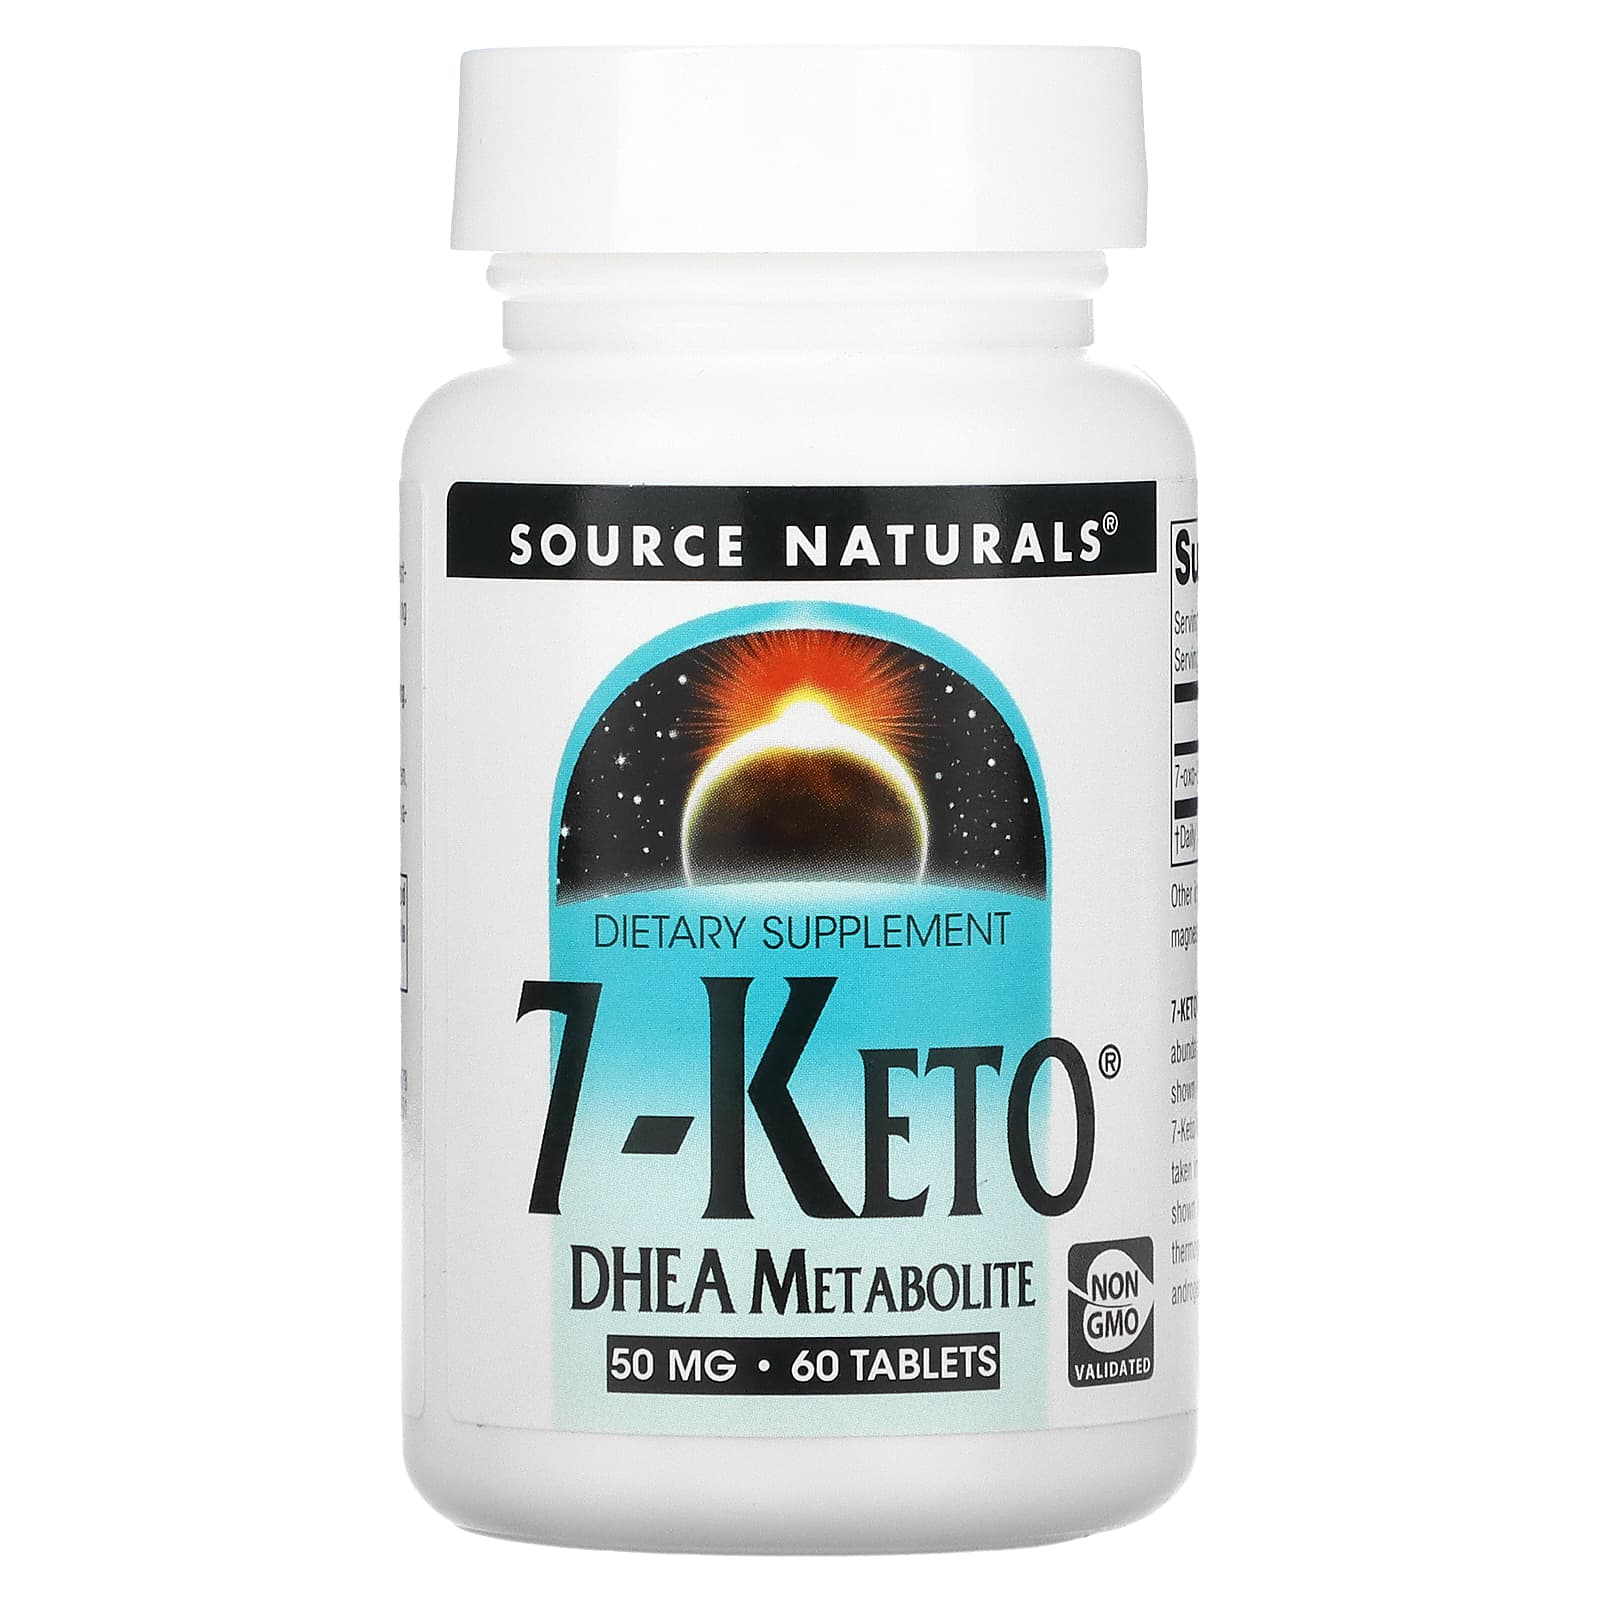 Source Naturals 7-Кето ДГЭА метаболит 50 мг 60 таблеток